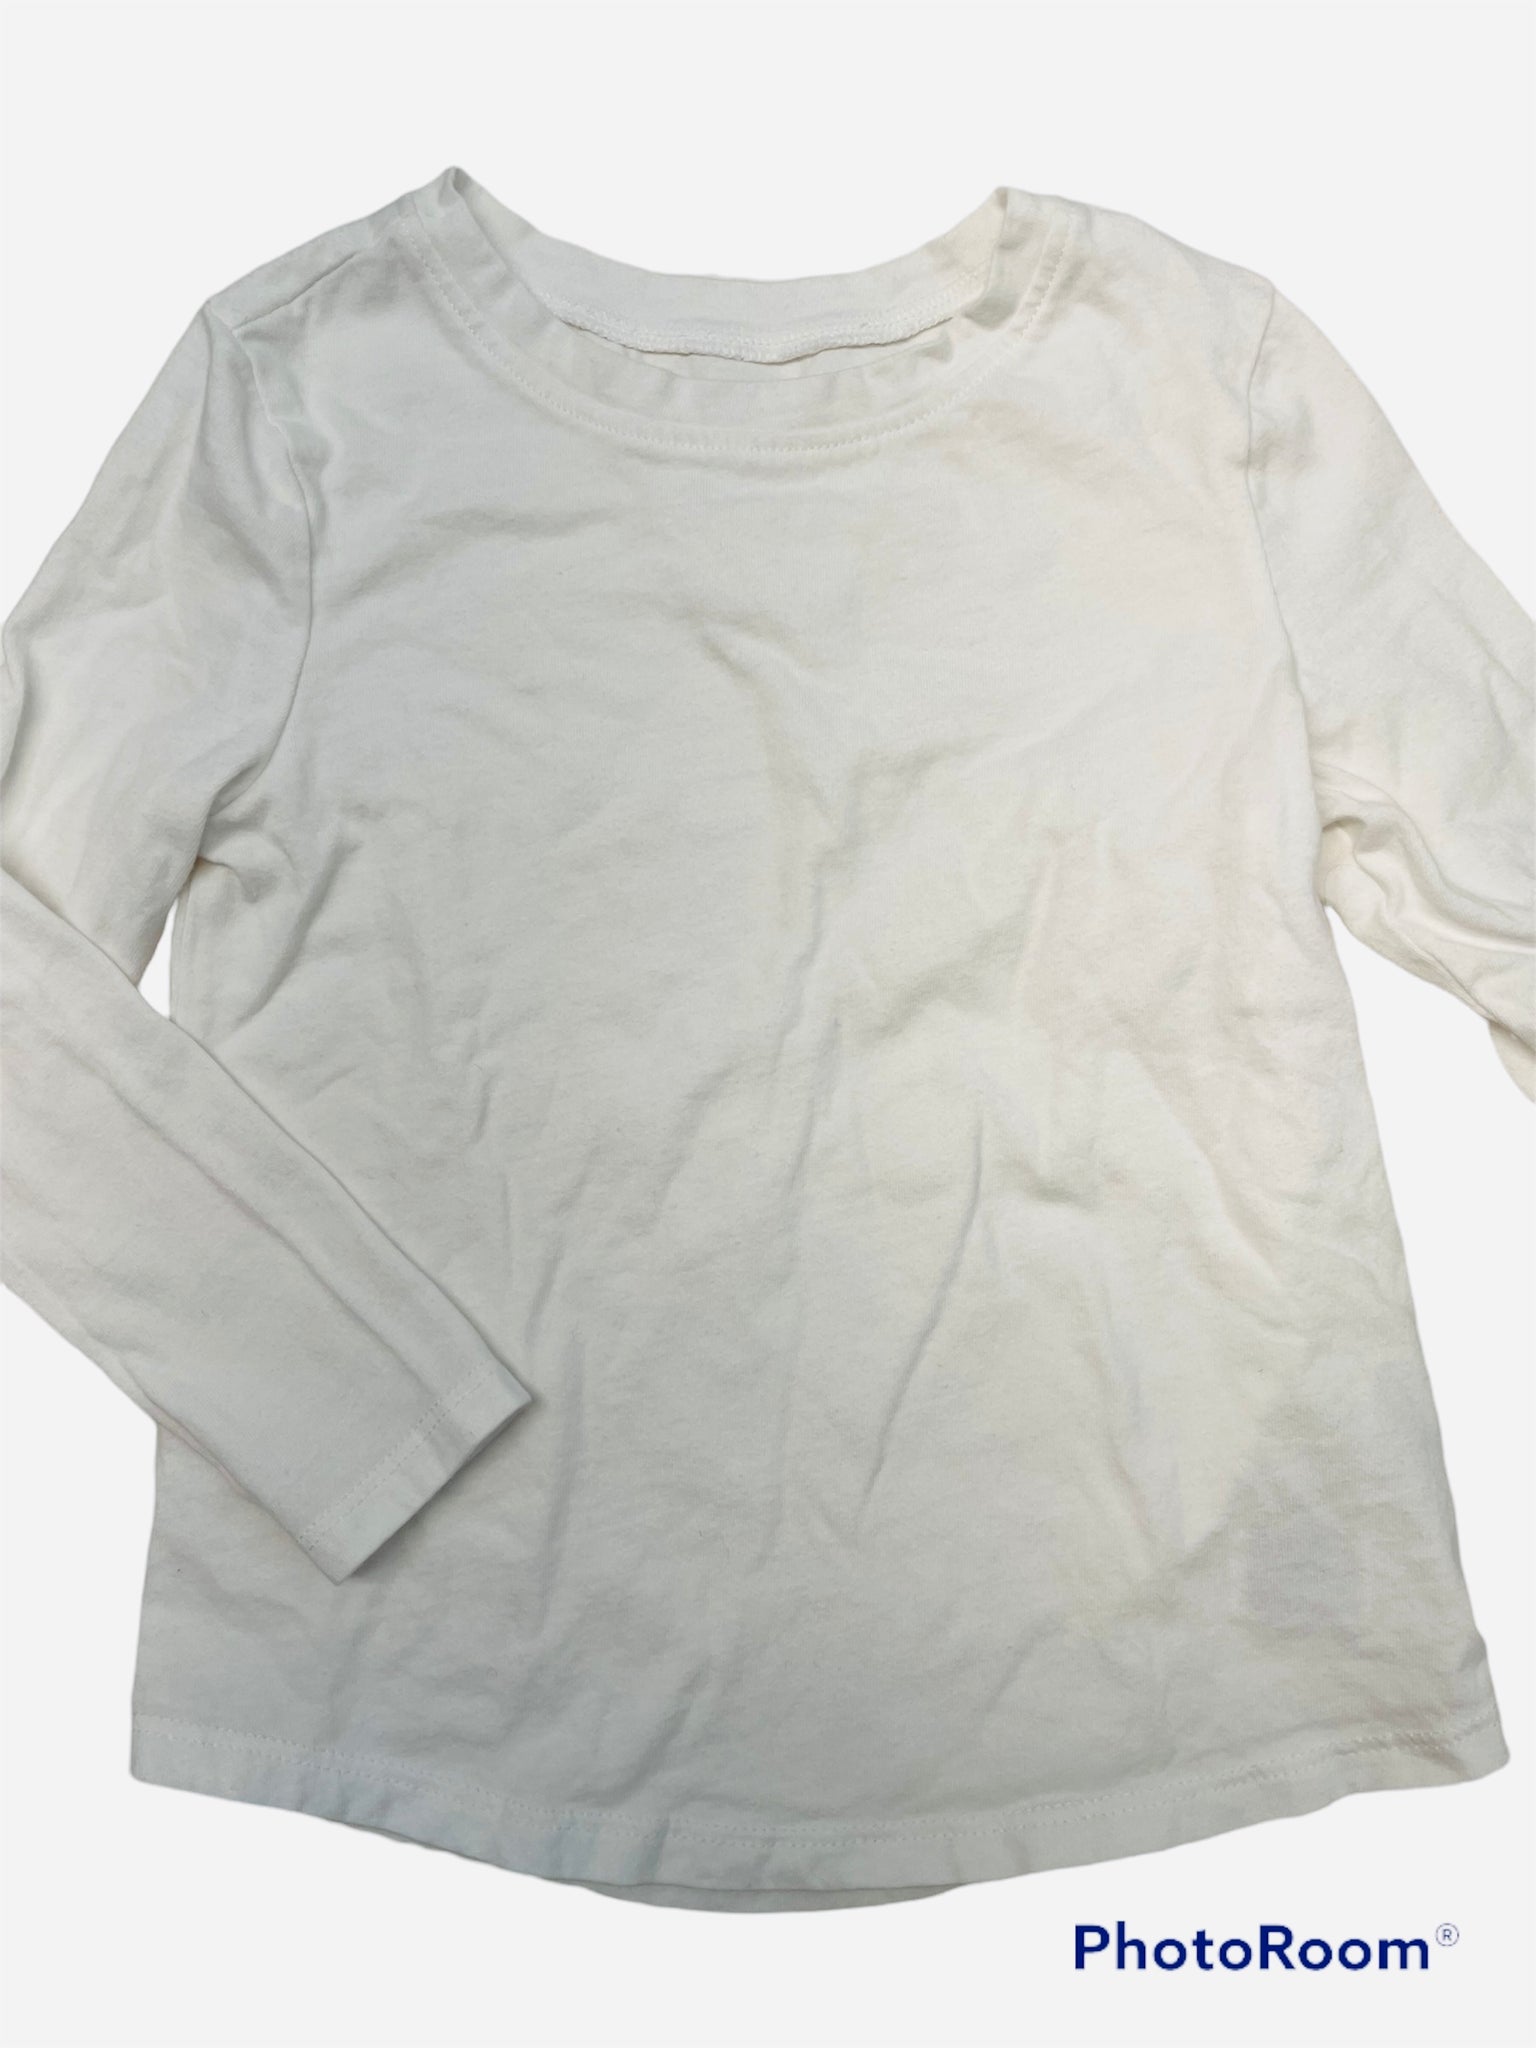 Girls Long Sleeve Shirt Old Navy 3T